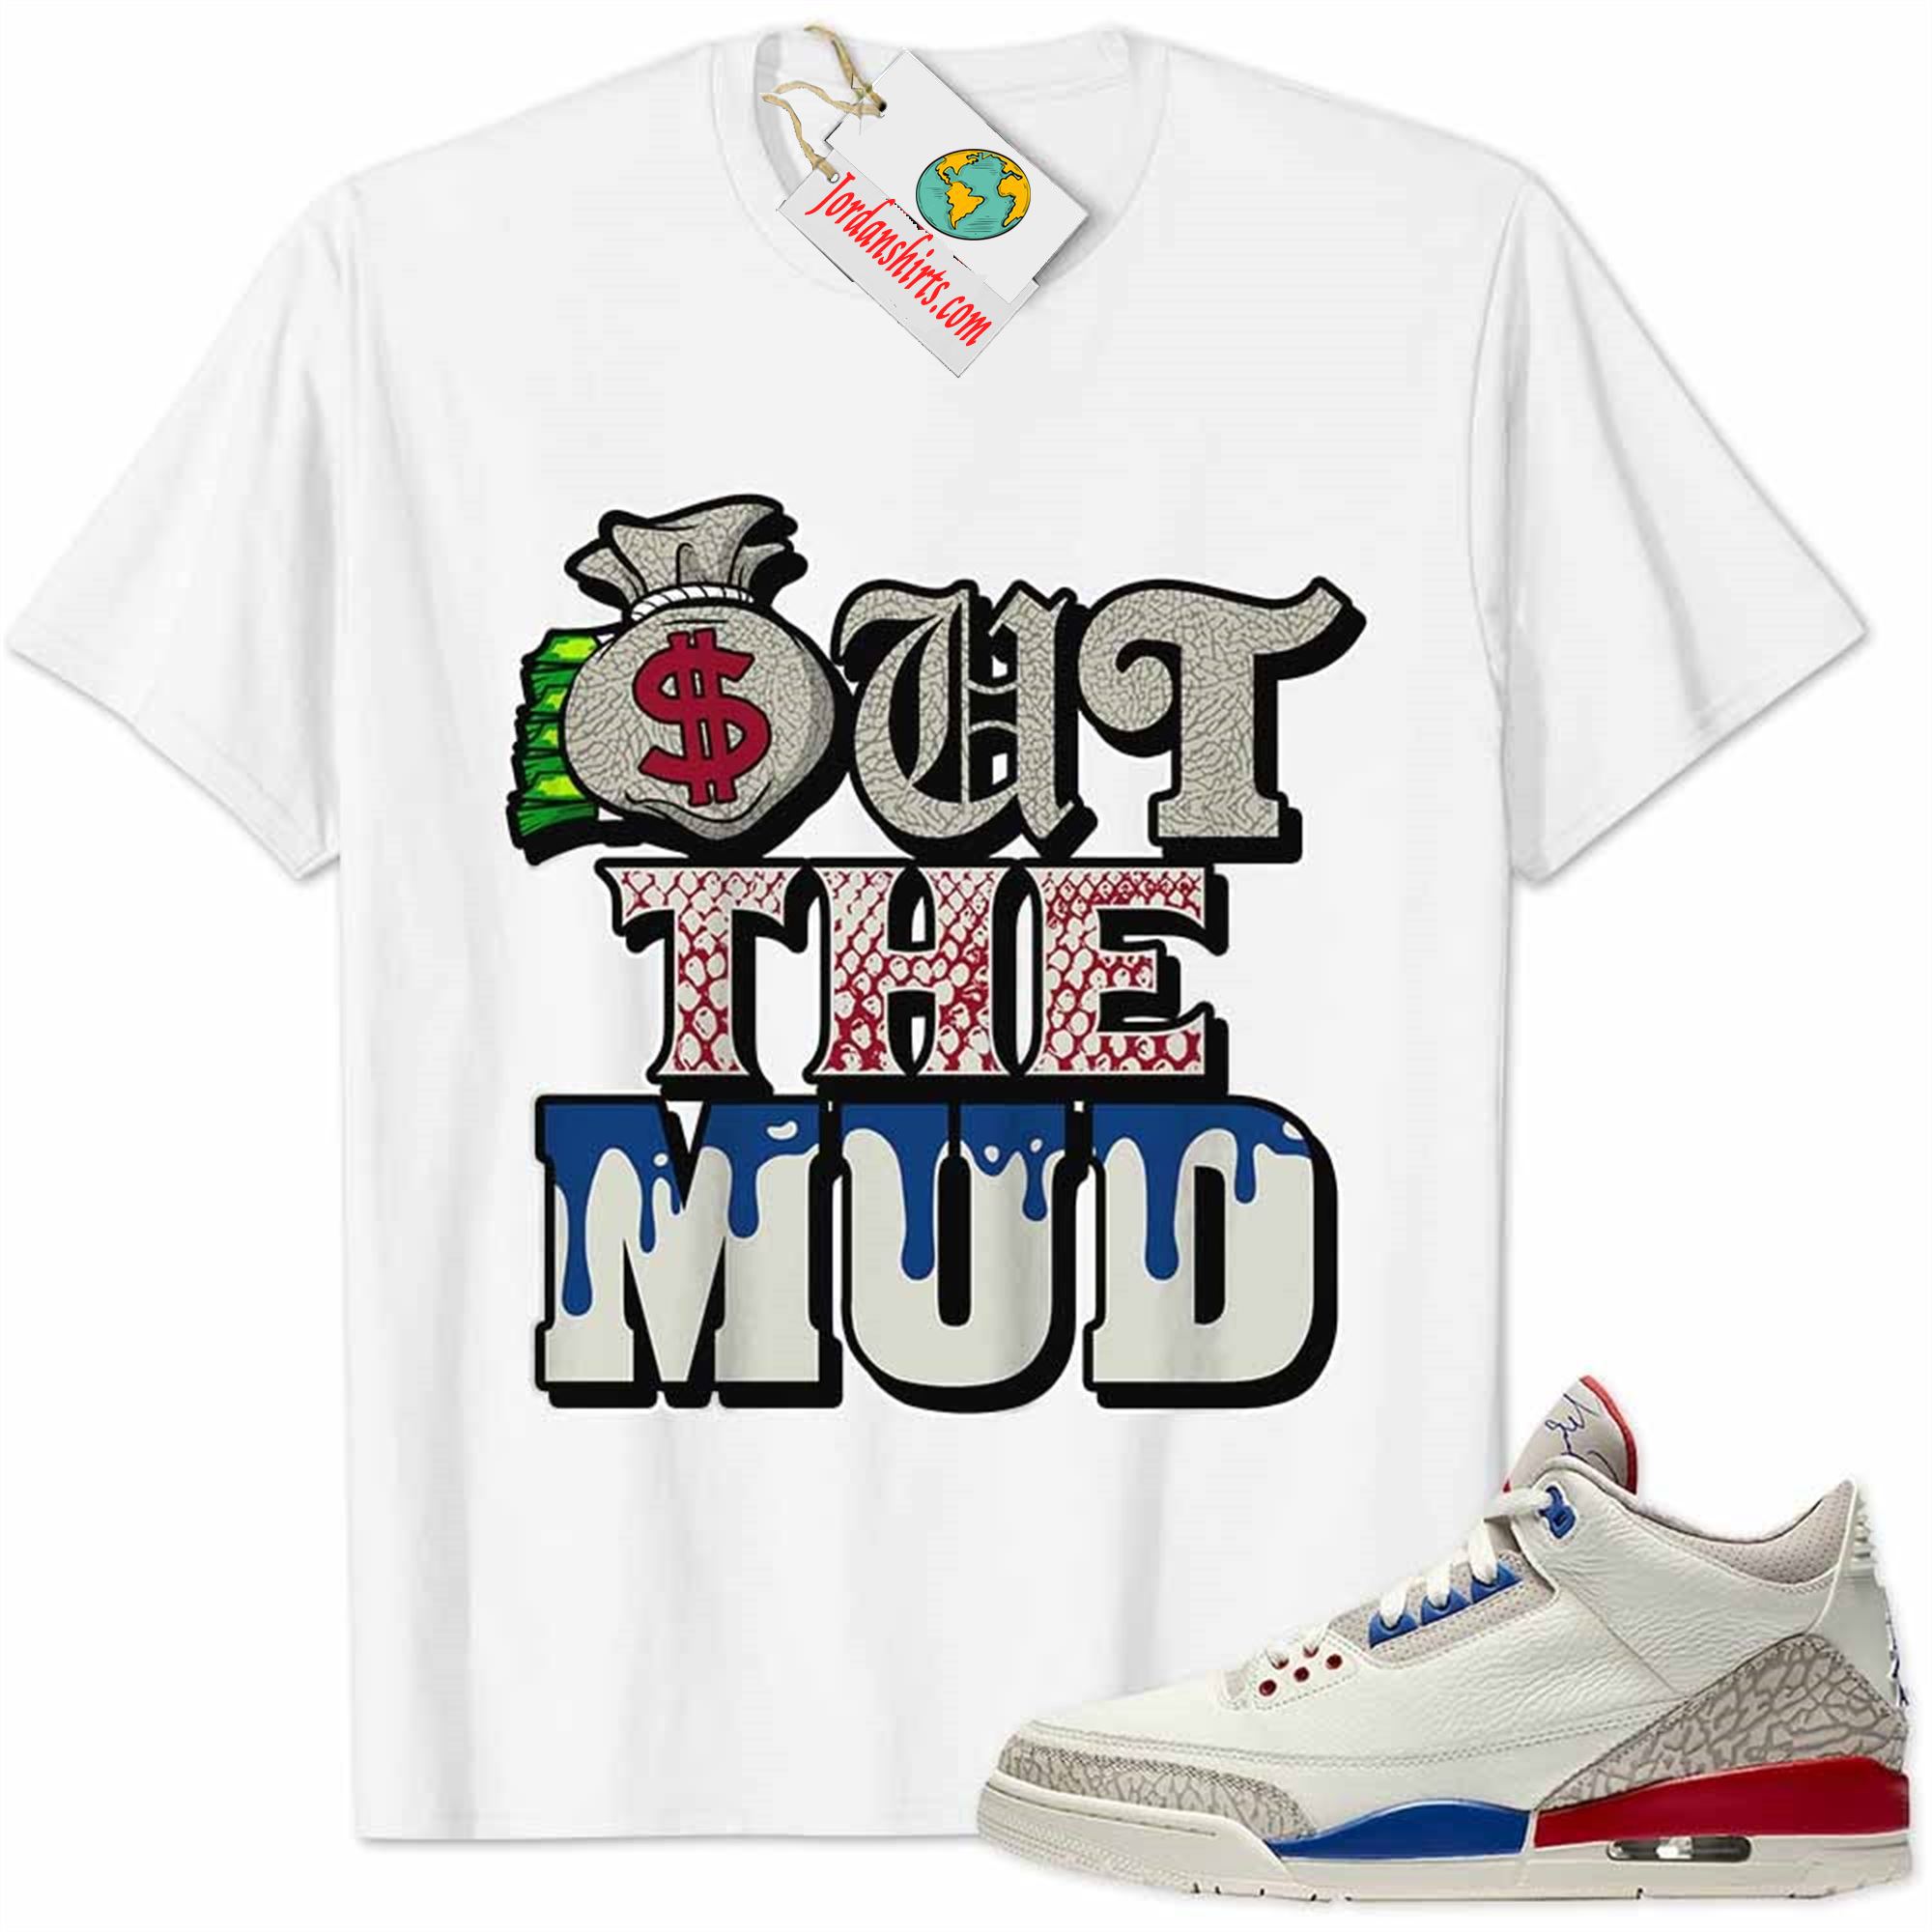 Jordan 3 Shirt, Jordan 3 International Flight Charity Game Shirt Out The Mud Money Bag White Size Up To 5xl